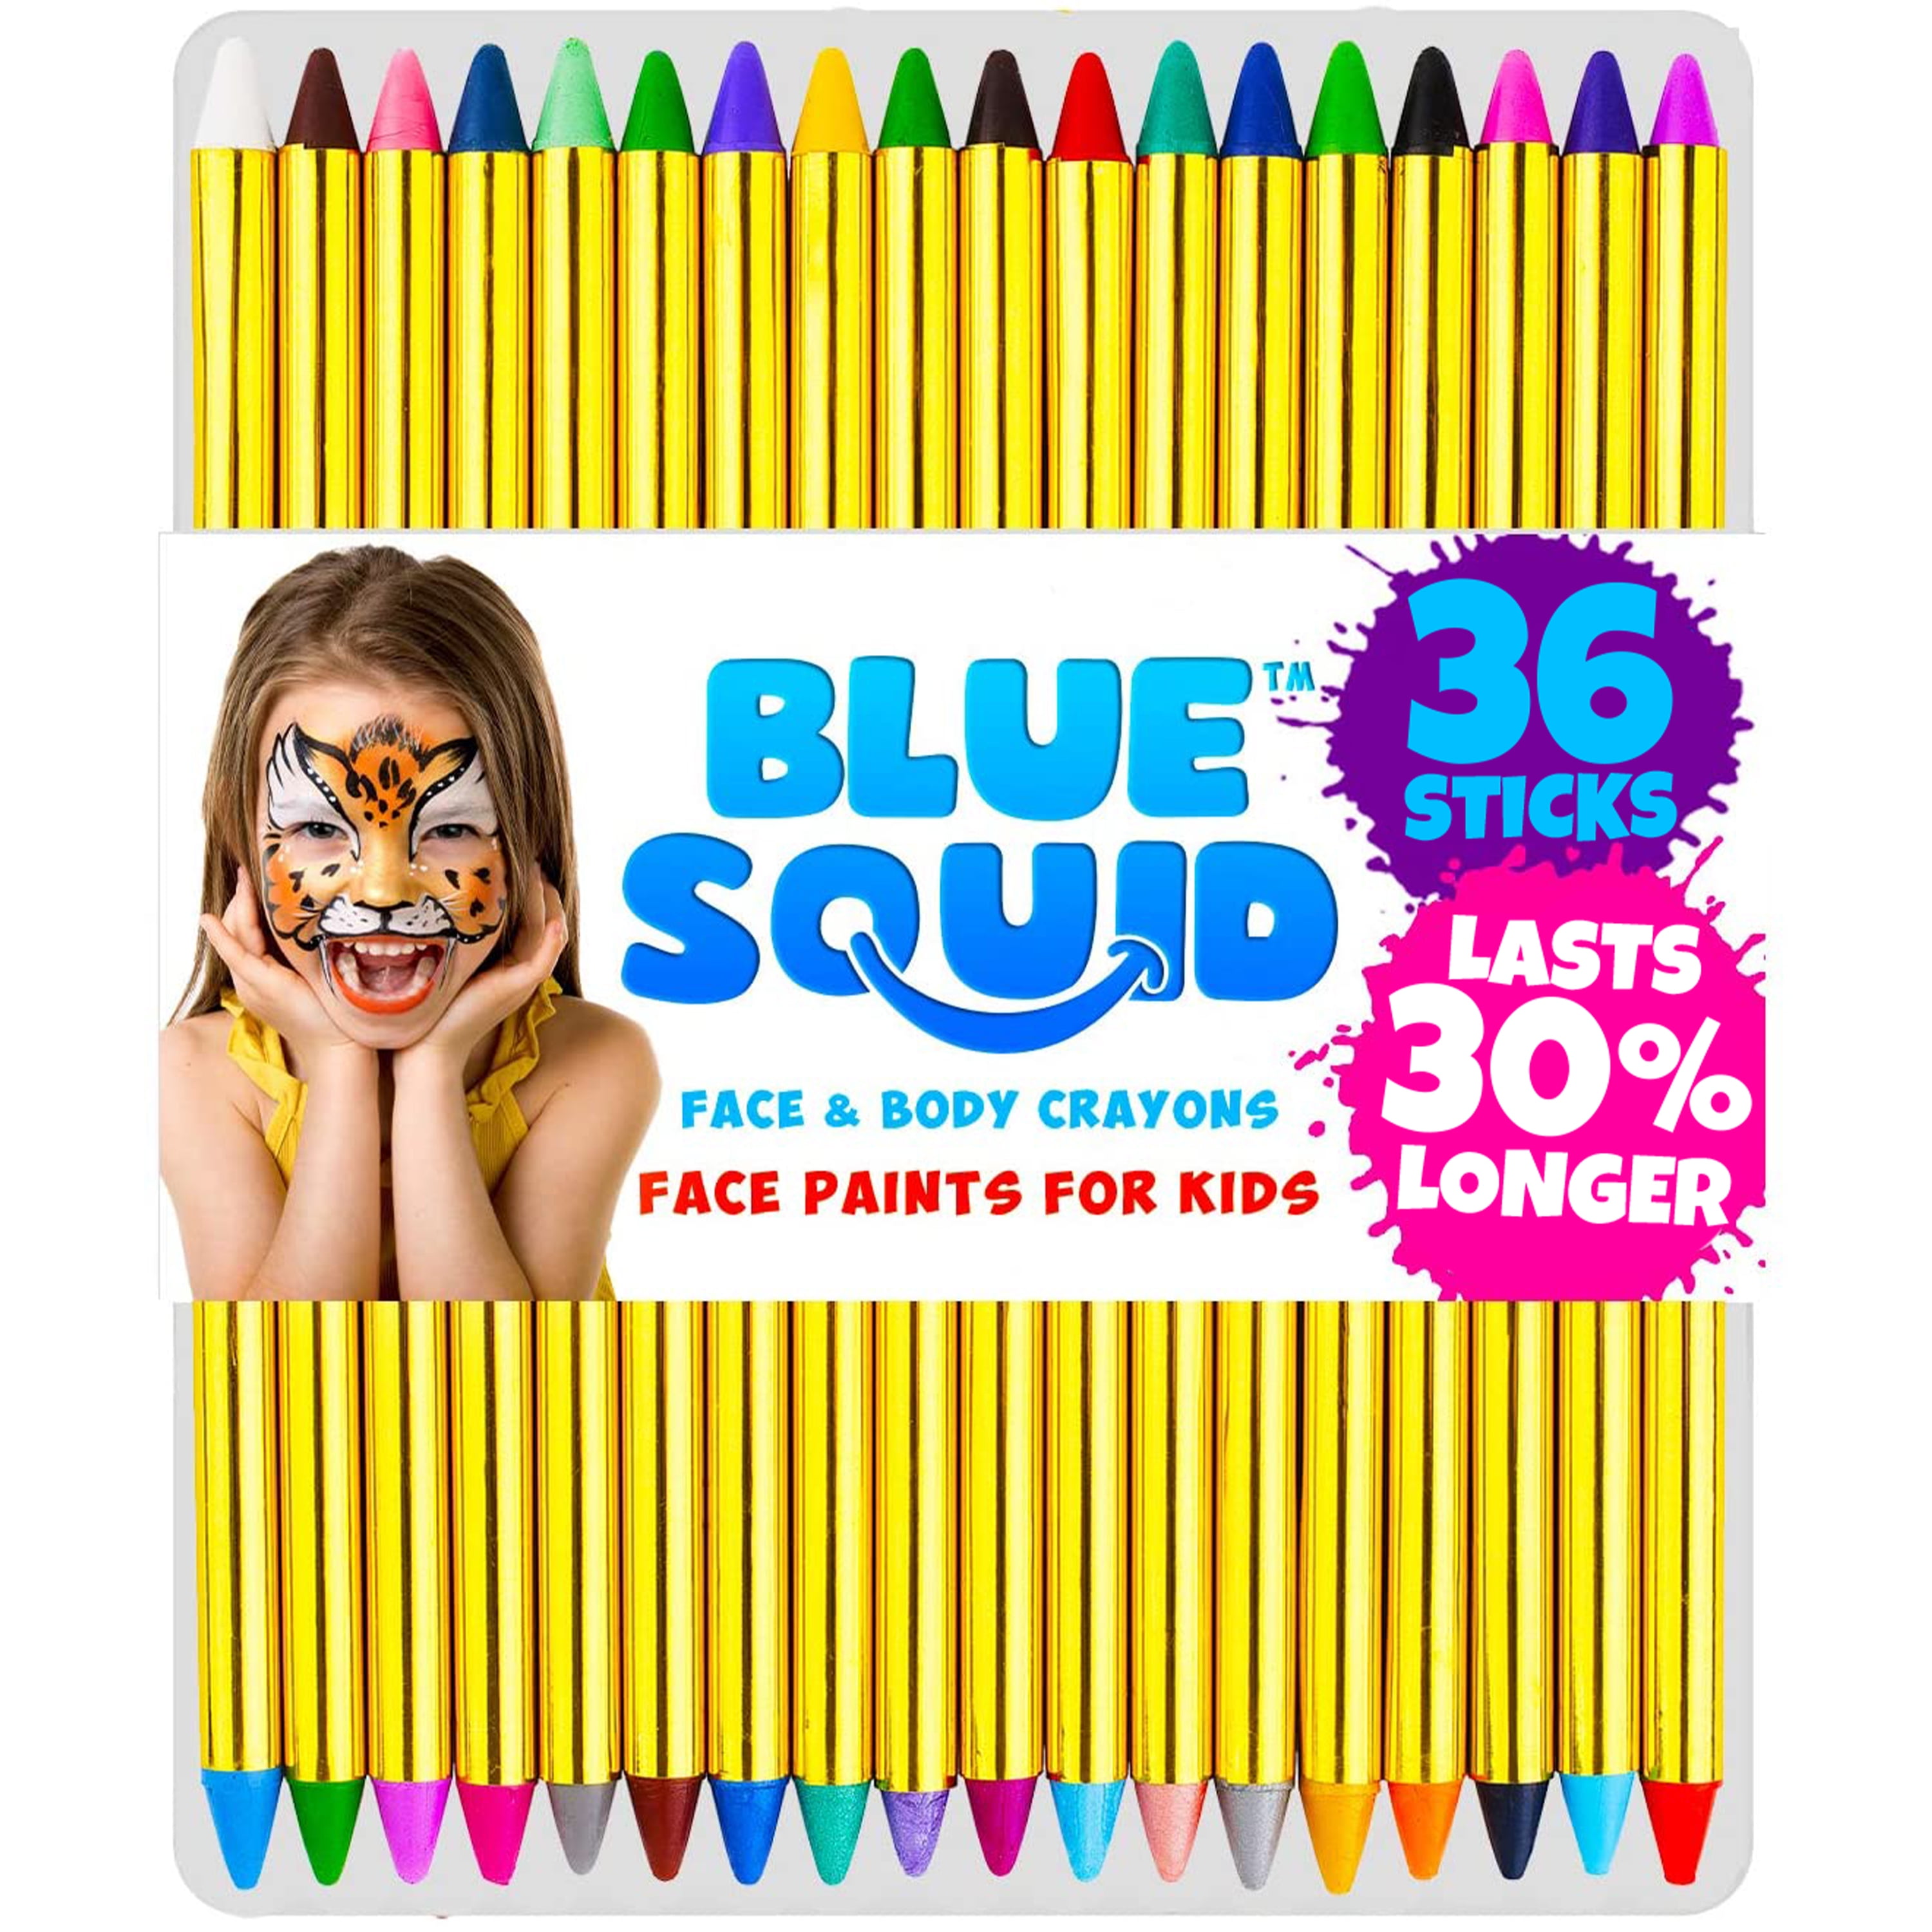 Blue Squid Face Paint Kit for Kids - 160pcs, 22 Colors, Ultimate Face Painting K